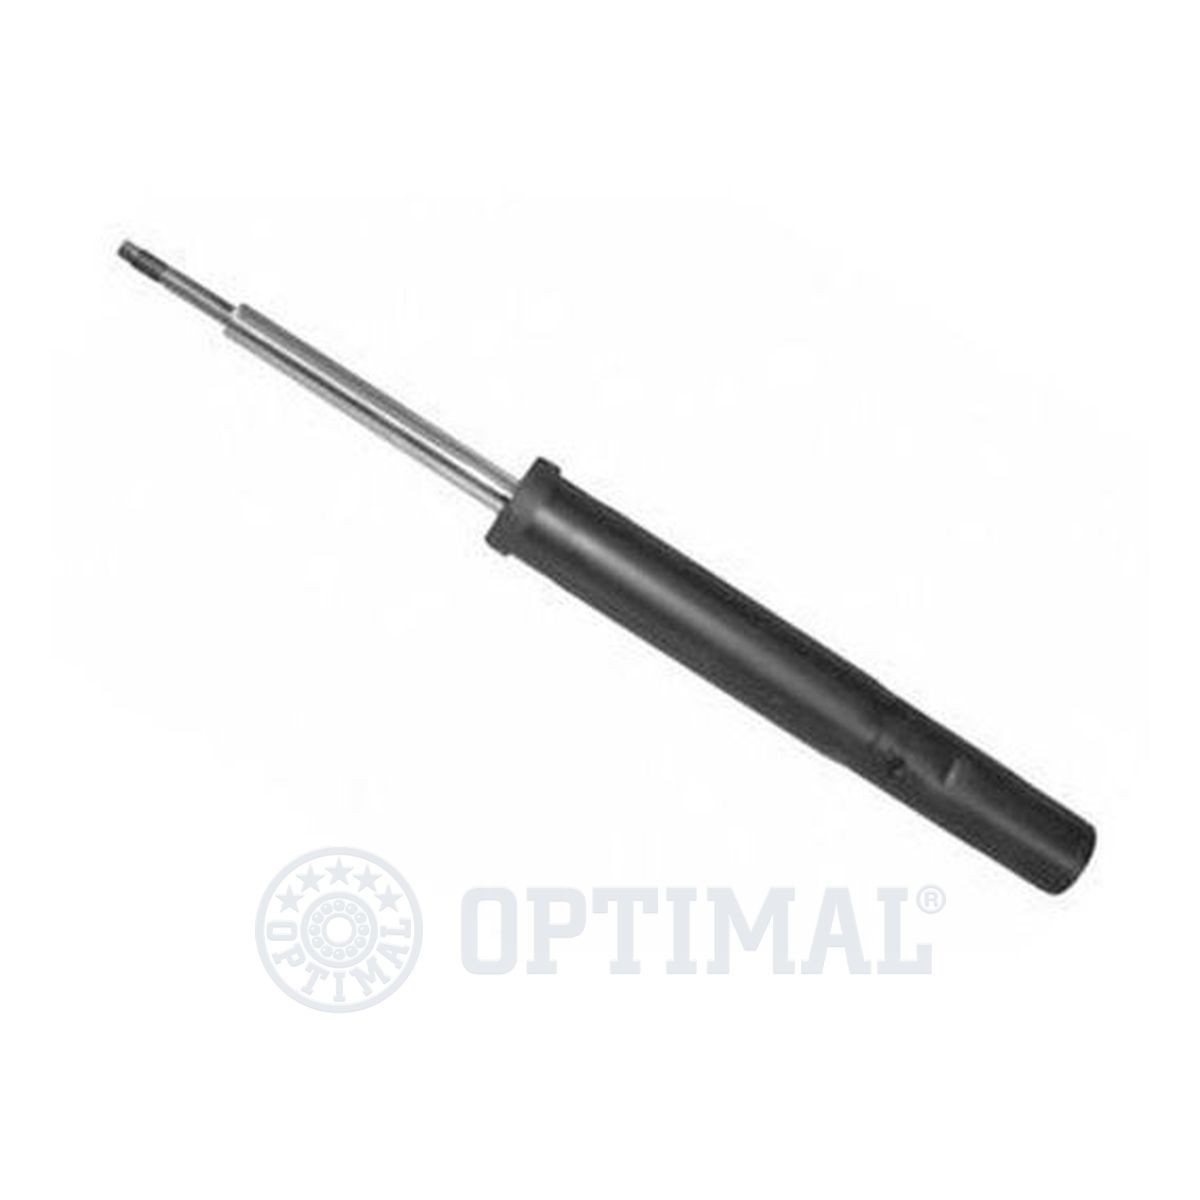 OPTIMAL A-67157G Shock absorber Gas Pressure, Twin-Tube, Spring-bearing Damper, Top pin, Bottom Clamp, M12x1.25